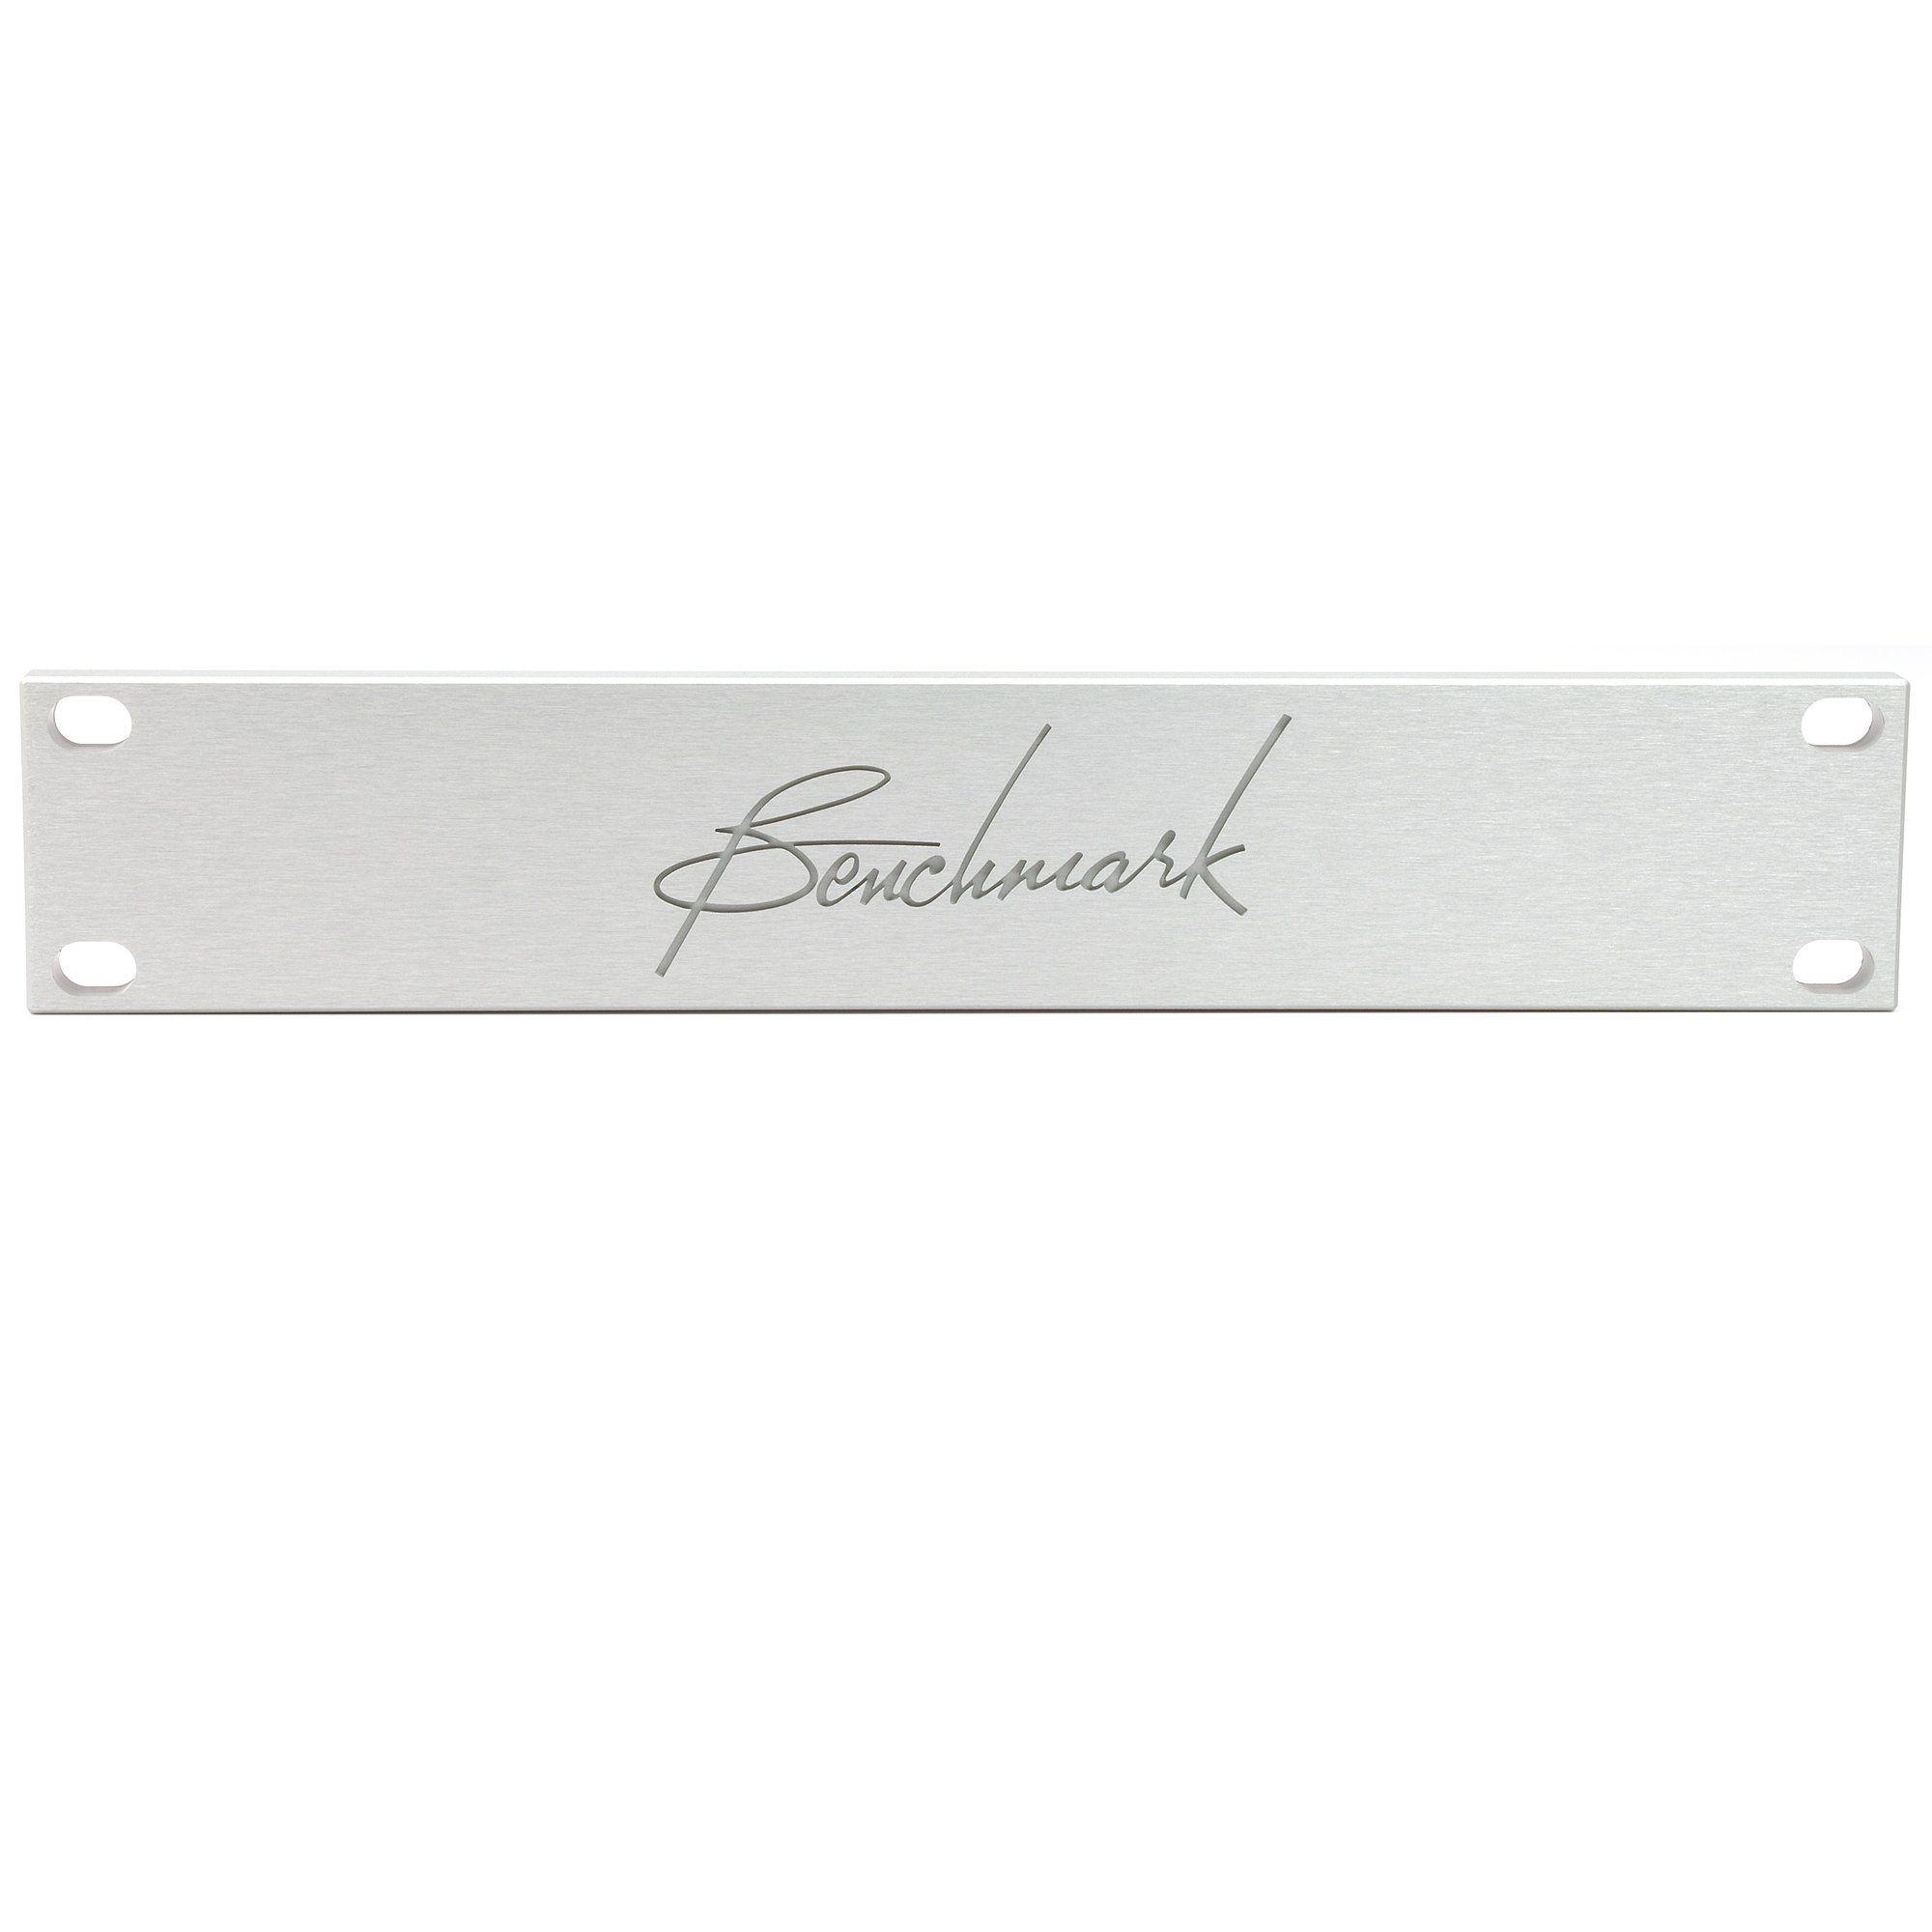 Benchmark Logo - Benchmark 1 2 Wide Blank Plate With Logo